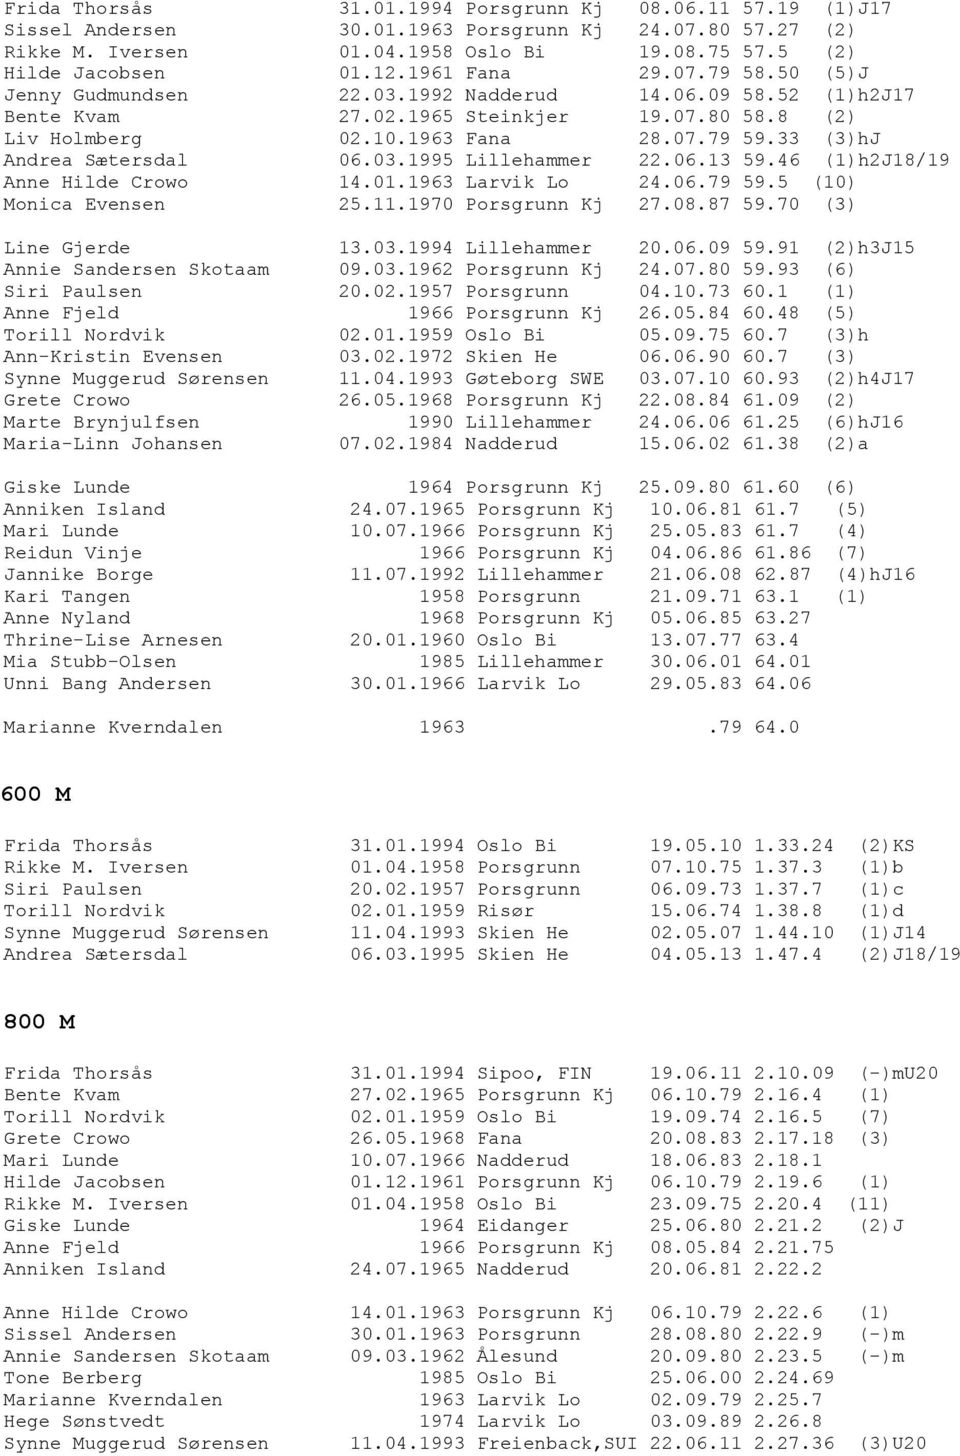 33 (3)hJ Andrea Sætersdal 06.03.1995 Lillehammer 22.06.13 59.46 (1)h2J18/19 Anne Hilde Crowo 14.01.1963 Larvik Lo 24.06.79 59.5 (10) Monica Evensen 25.11.1970 Porsgrunn Kj 27.08.87 59.